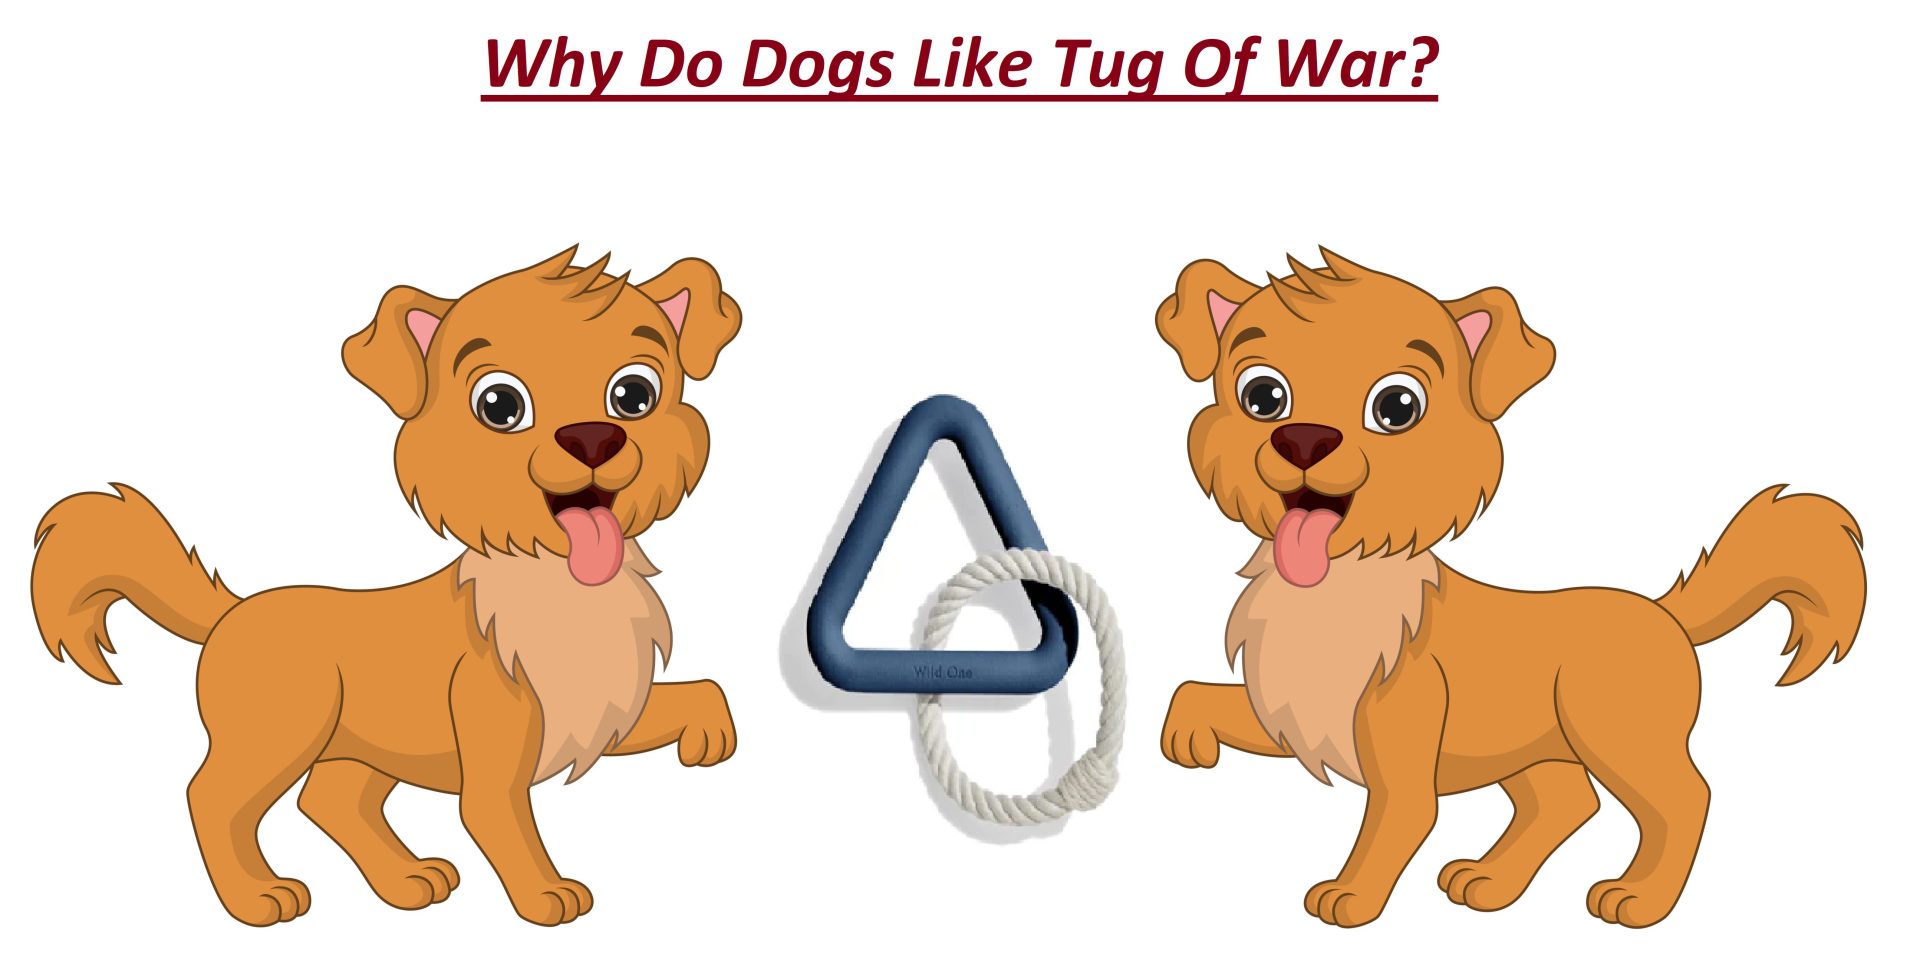 Why Do Dogs Like Tug Of War?